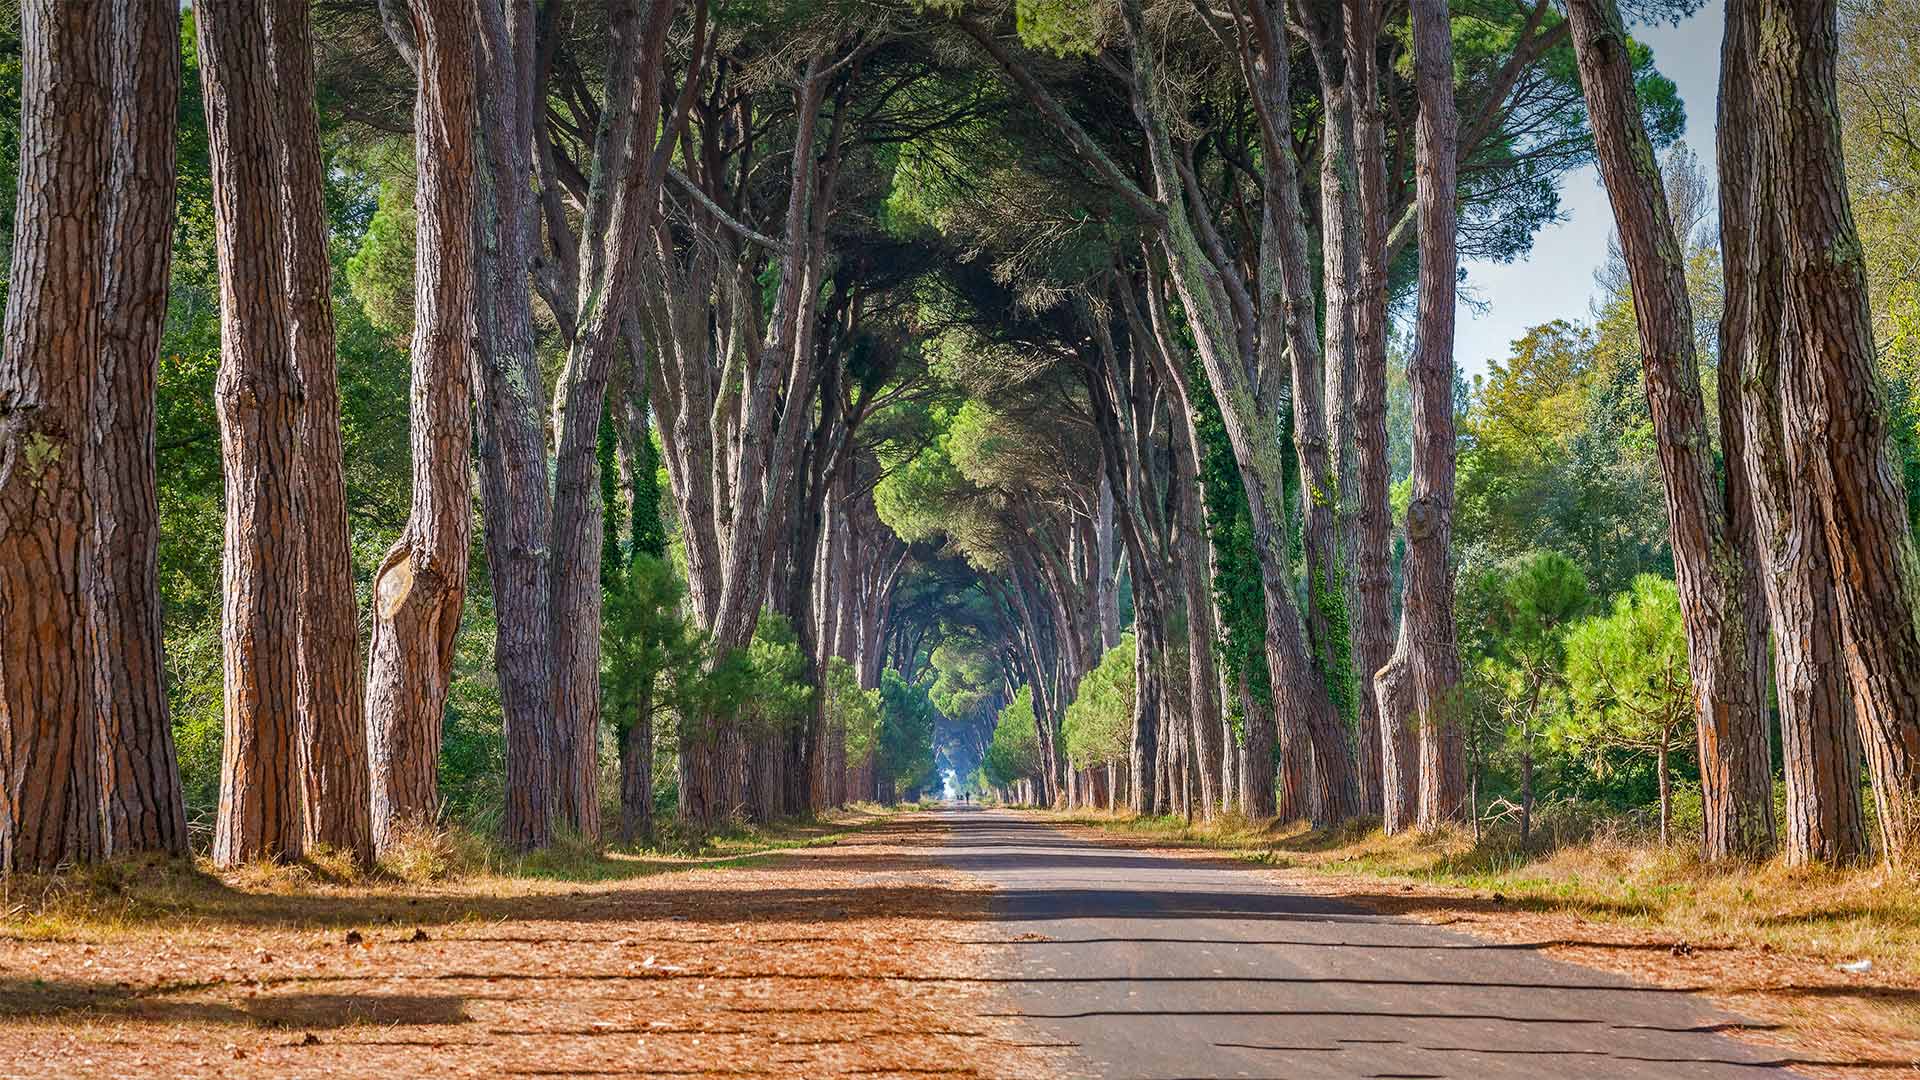 Regional Park of Migliarino, San Rossore, Massaciuccoli, Italy - Stefano Valeri/Alamy)